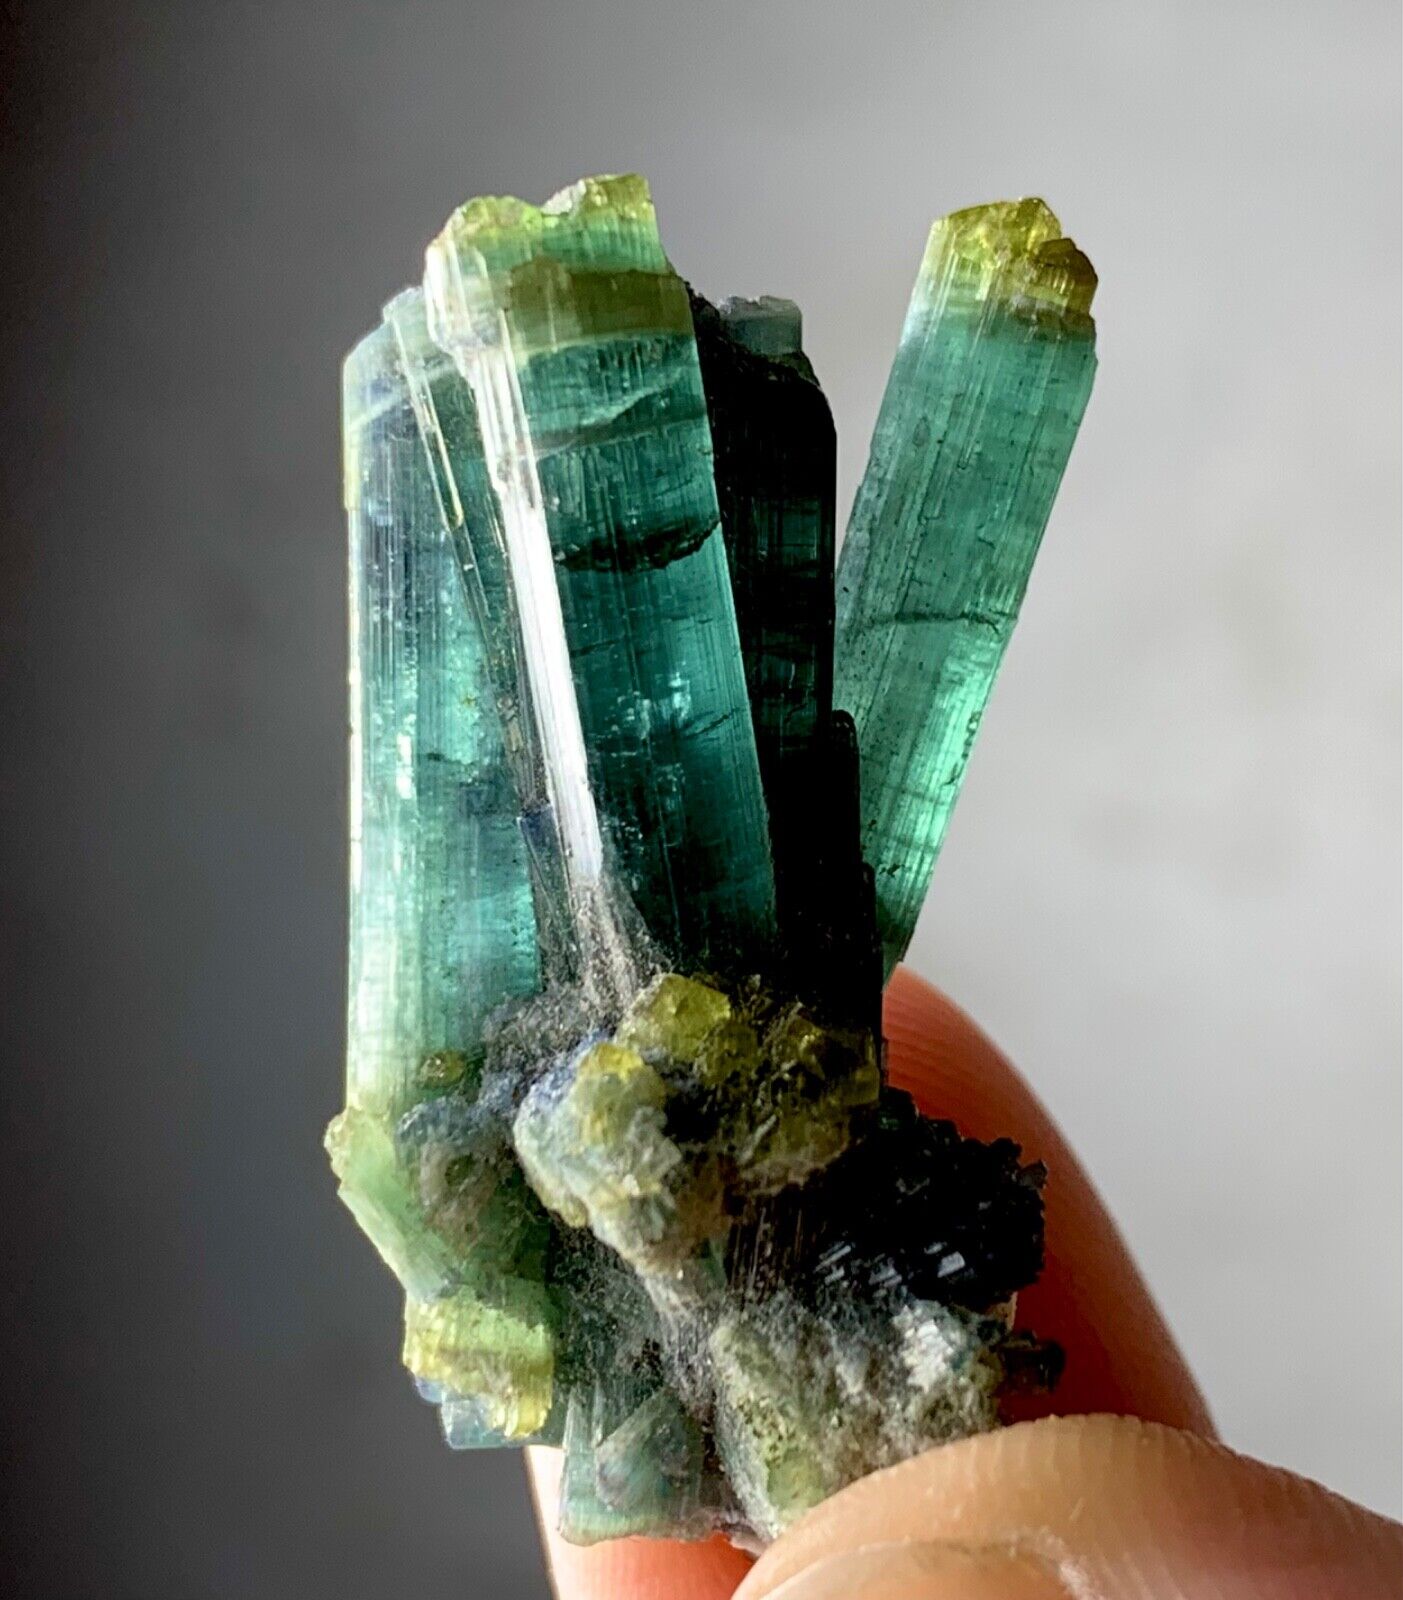 37 Carat Indicolite Tourmaline crystal Specimen from Afghanistan